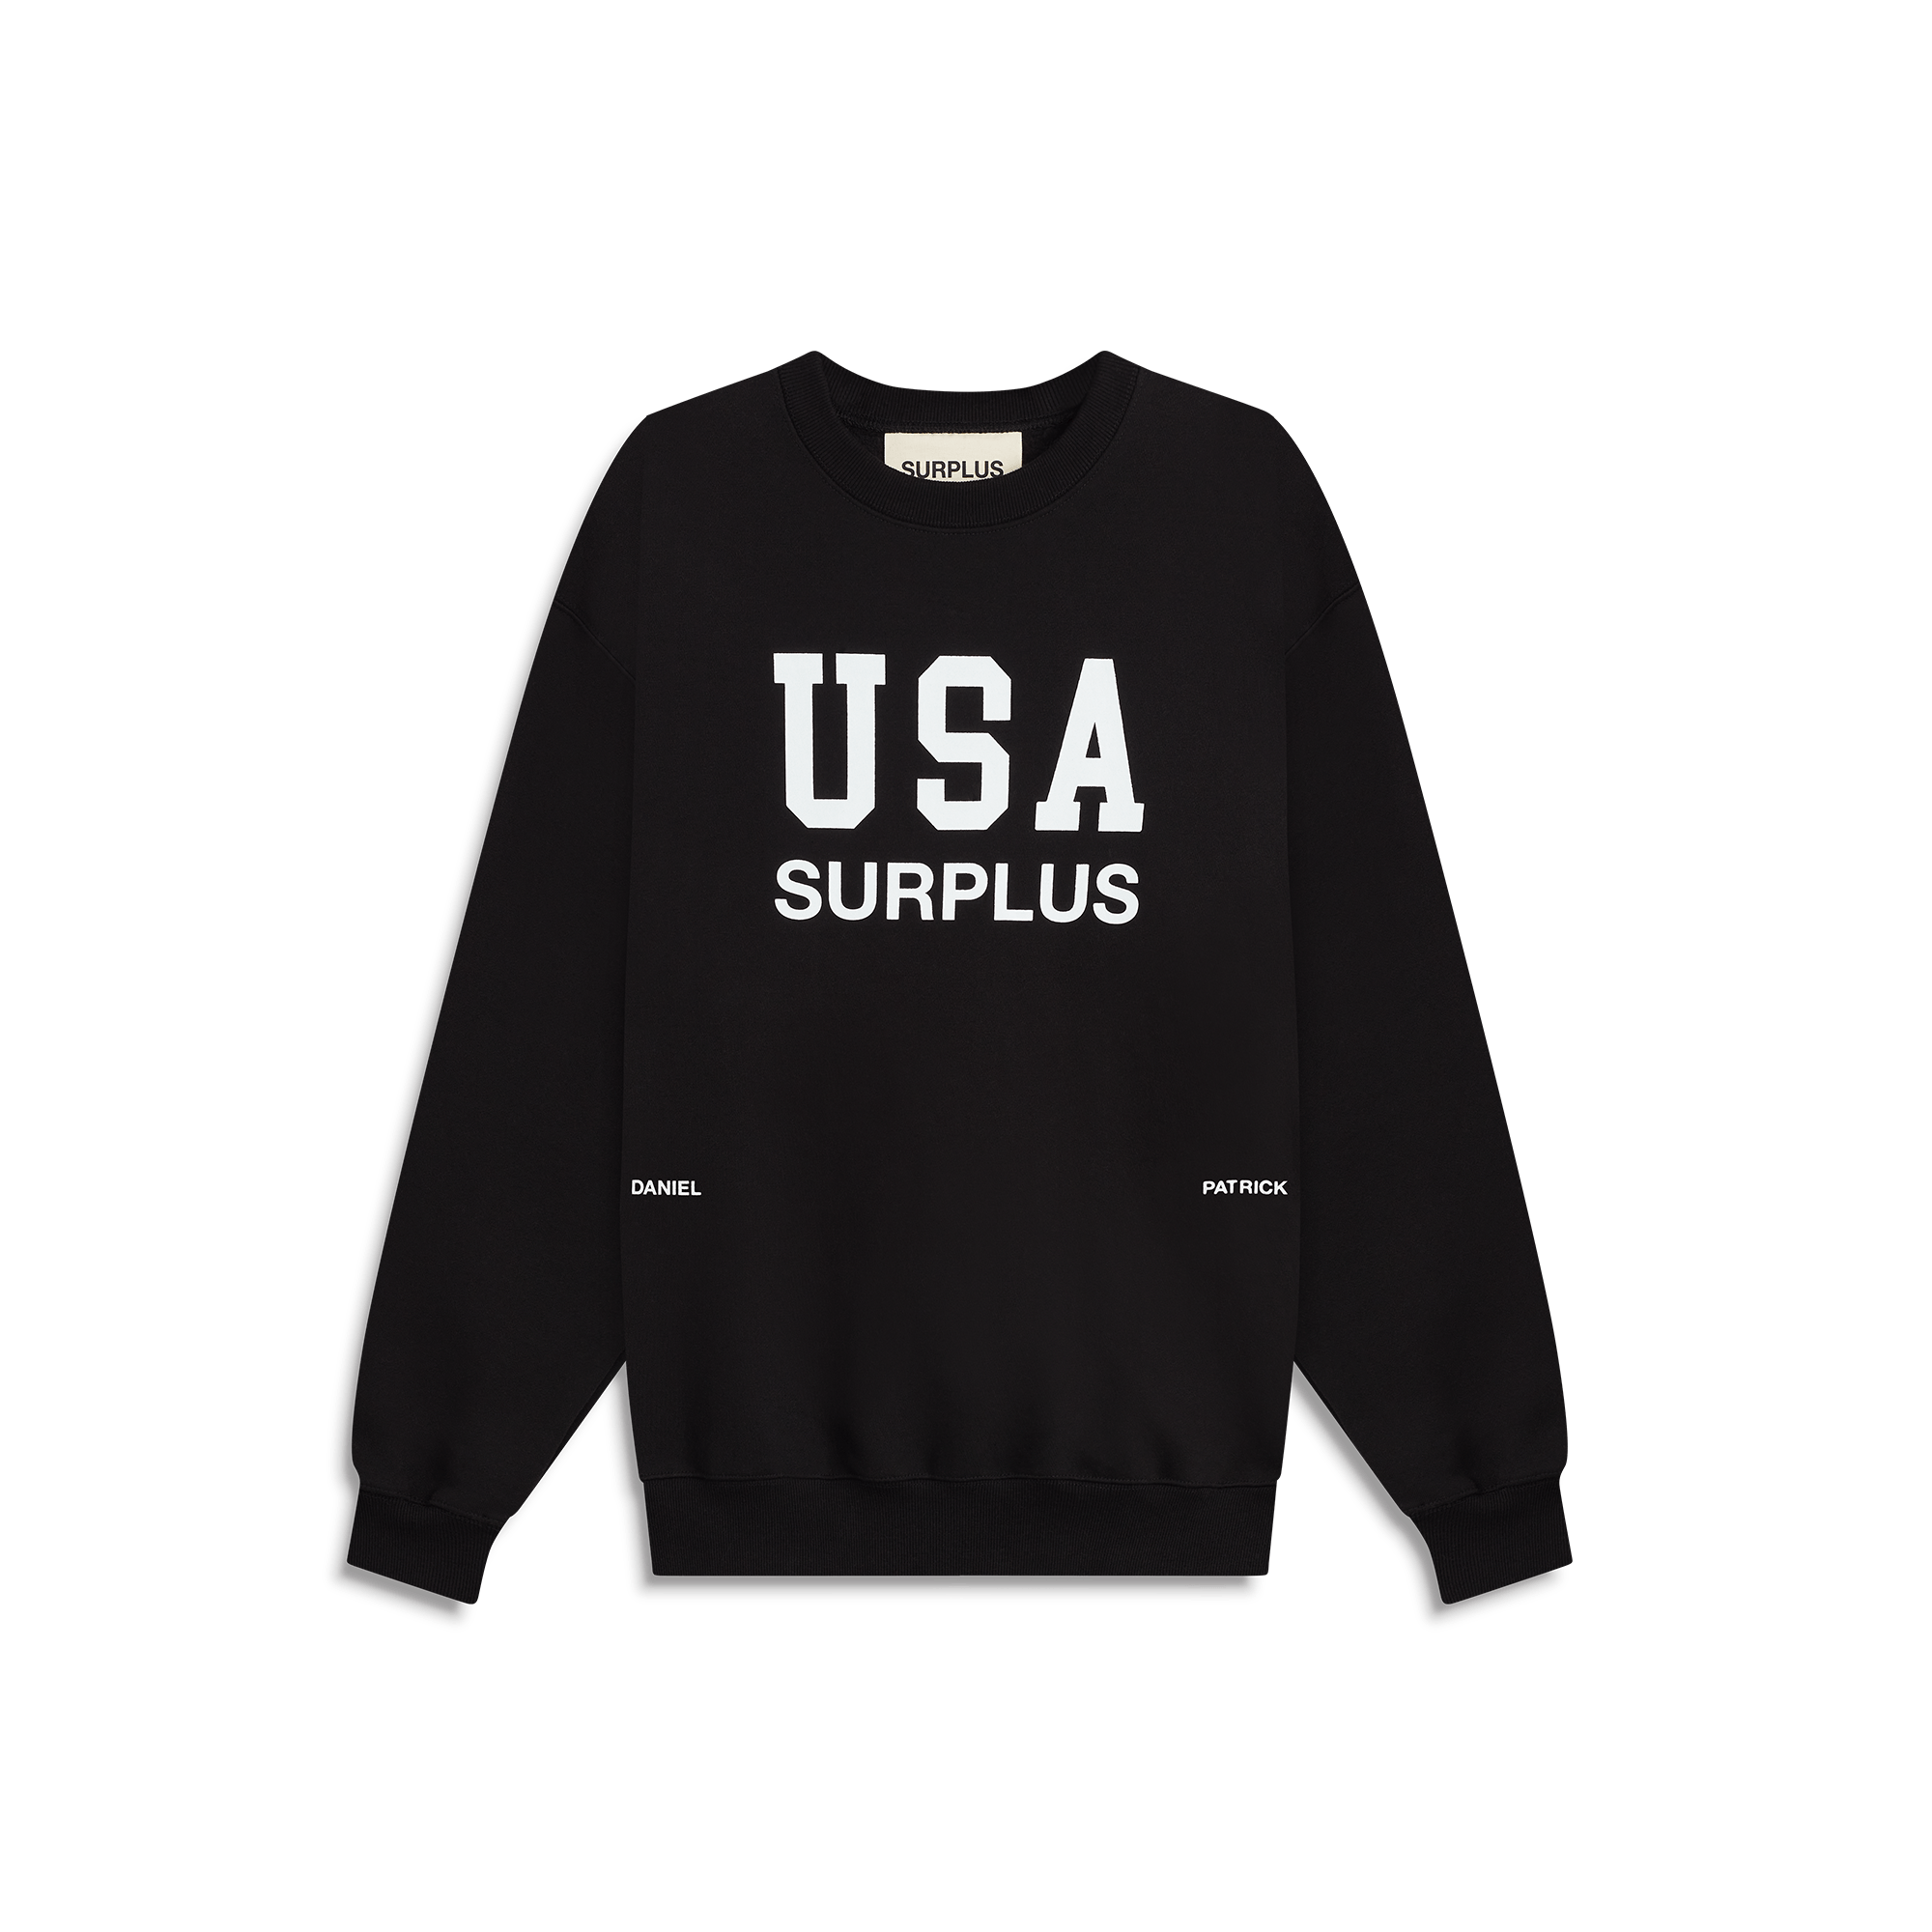 USA surplus crewneck / black + white